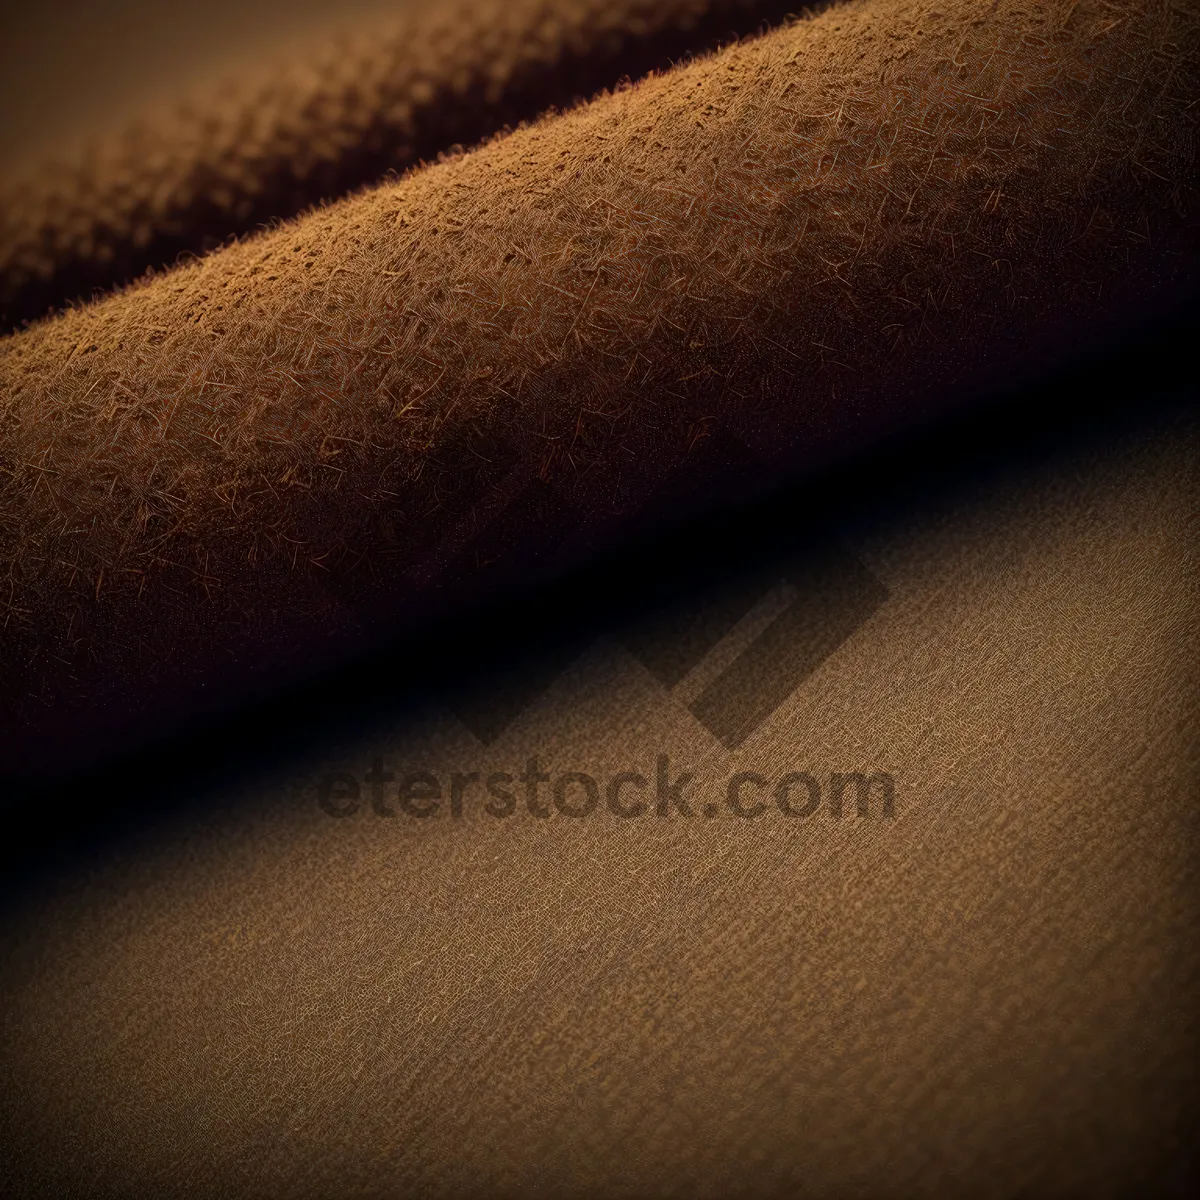 Picture of Leather Grunge Texture: Dark, Textured Animal Skin